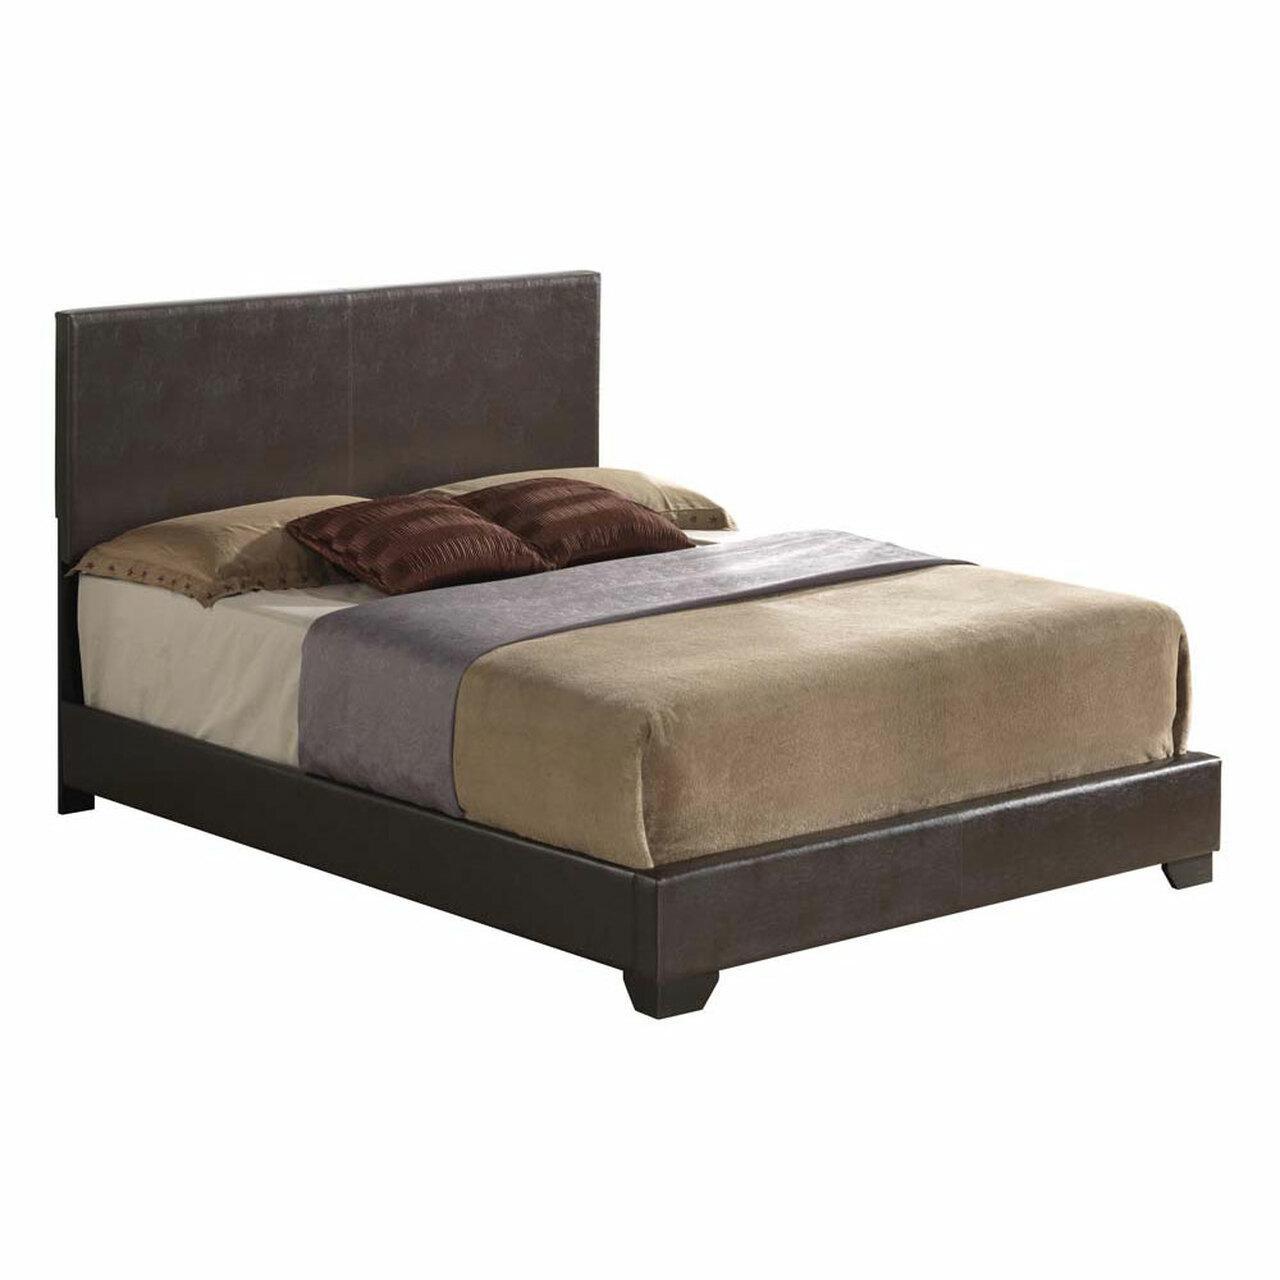 Acme Furniture Ireland III Full bed